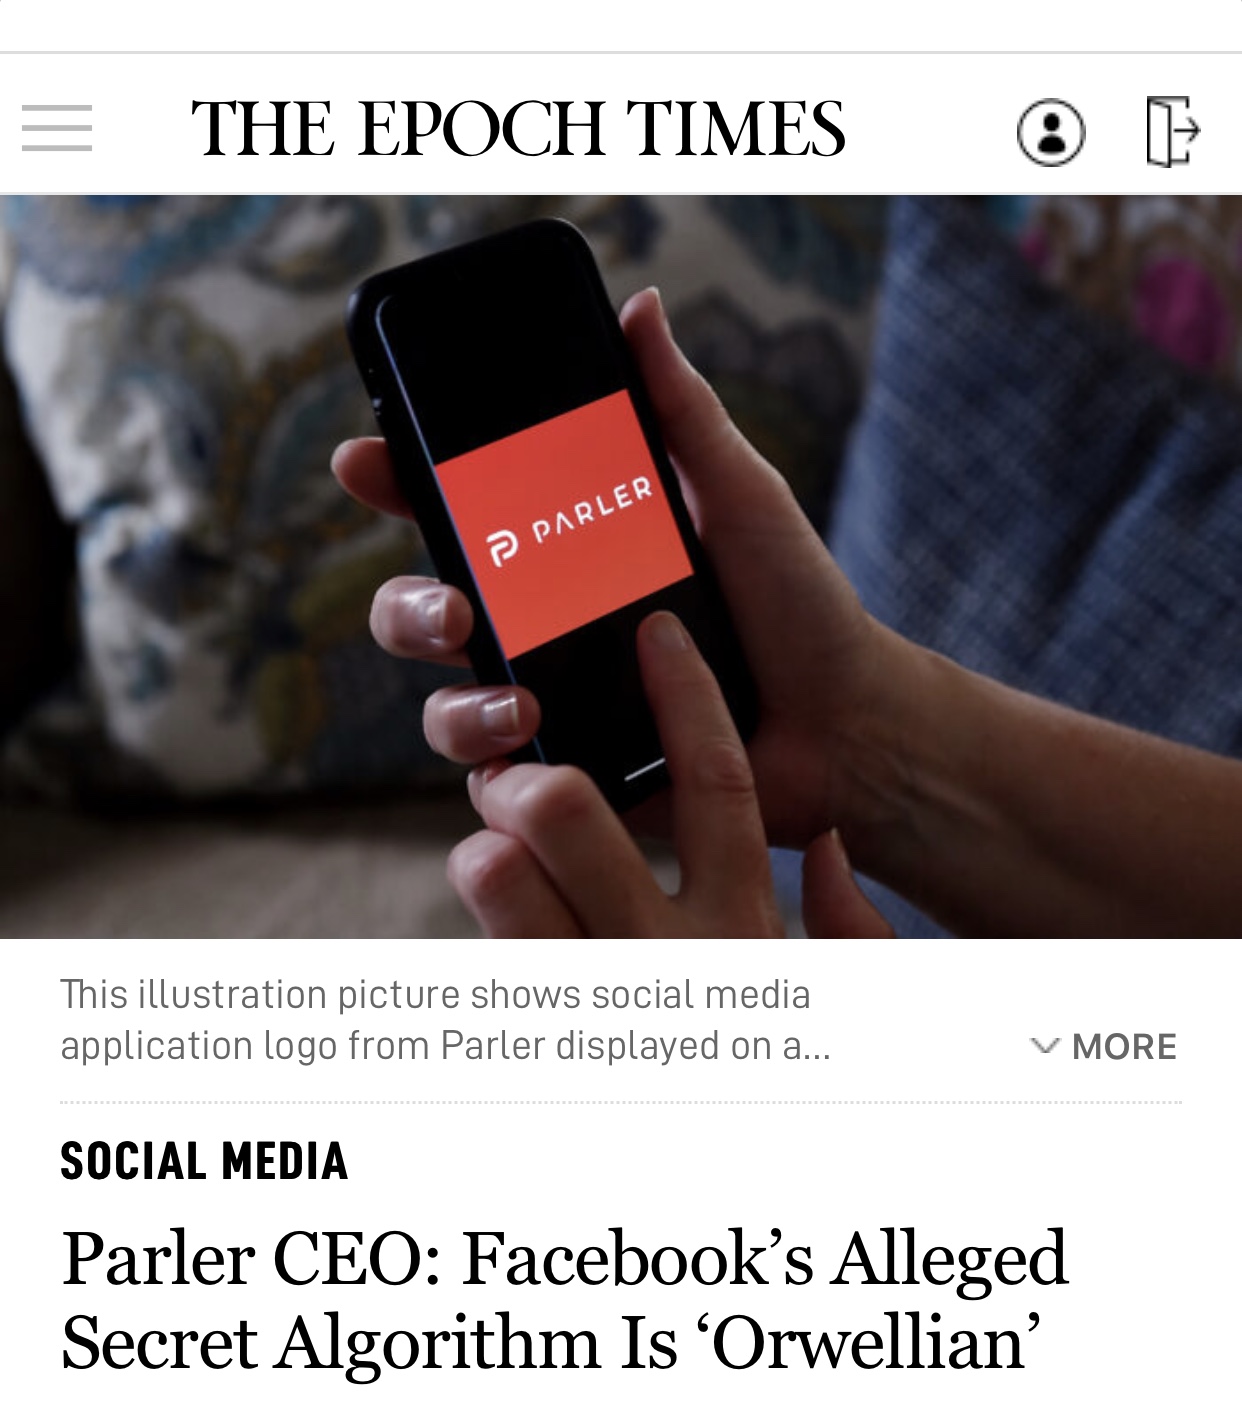 Parler CEO: Facebook’s Alleged Secret Algorithm Is ‘Orwellian’